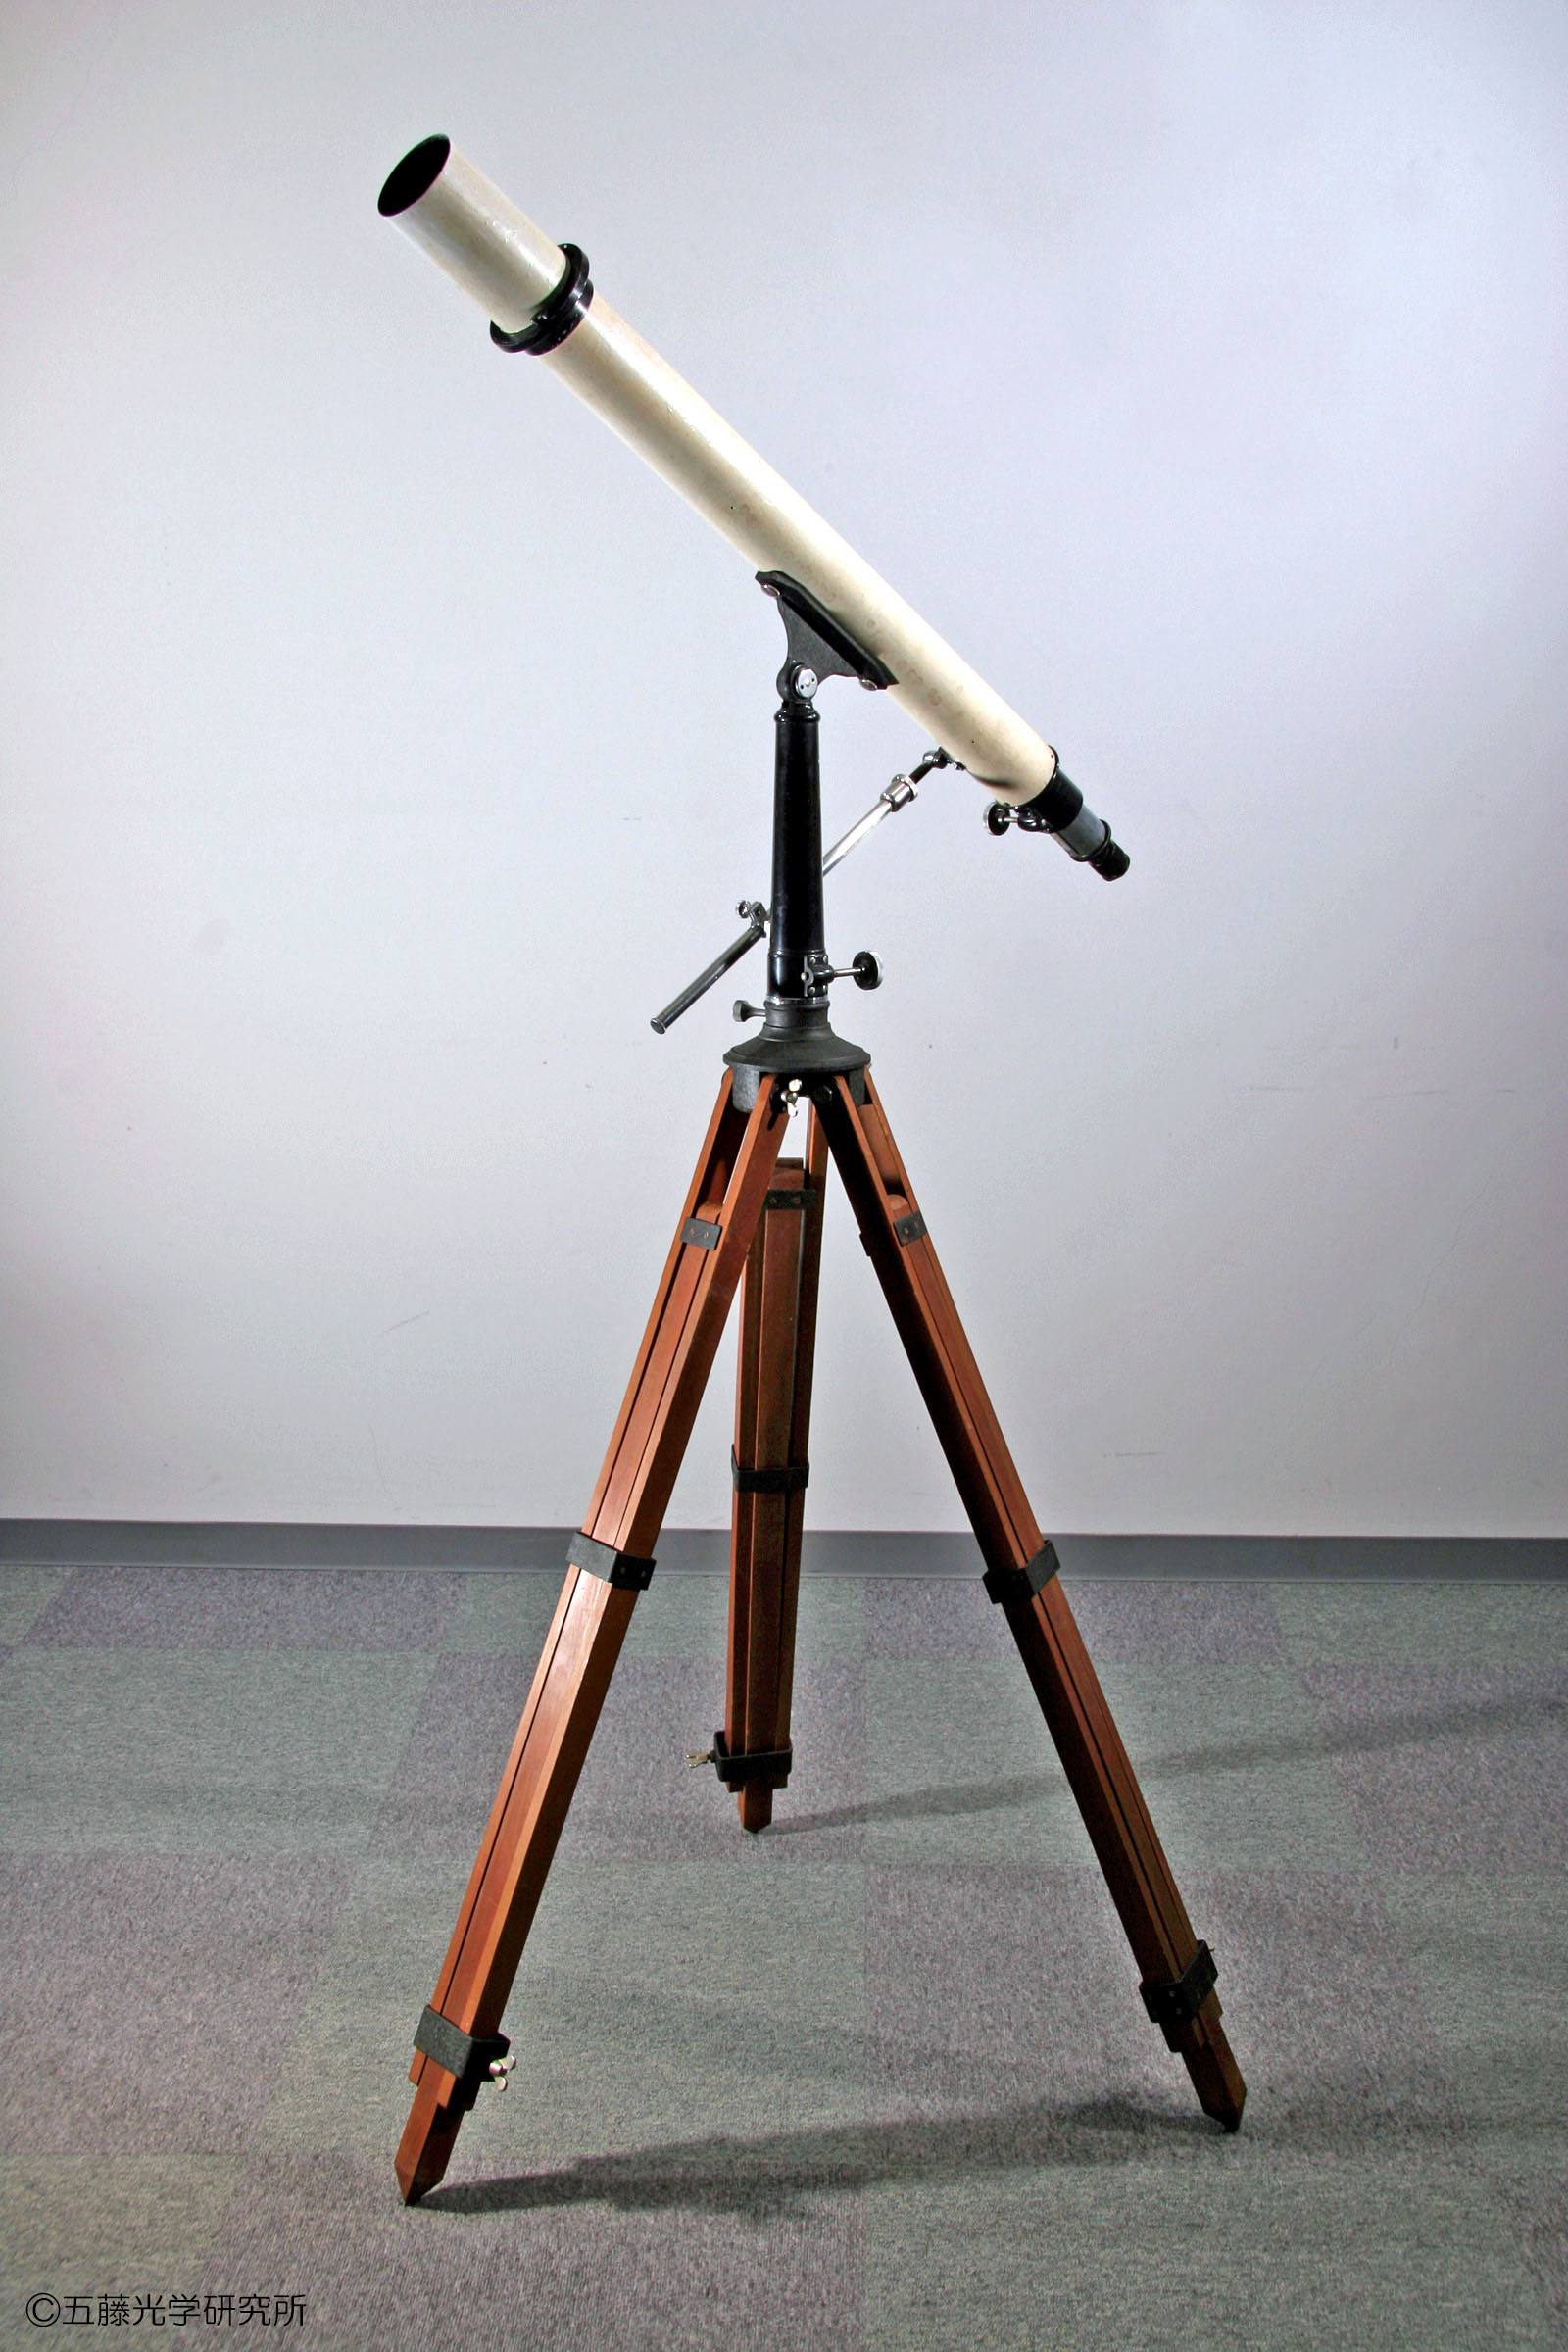 五藤式天体望遠鏡「ウラノス号3型」 – 日本望遠鏡工業会 Gallery